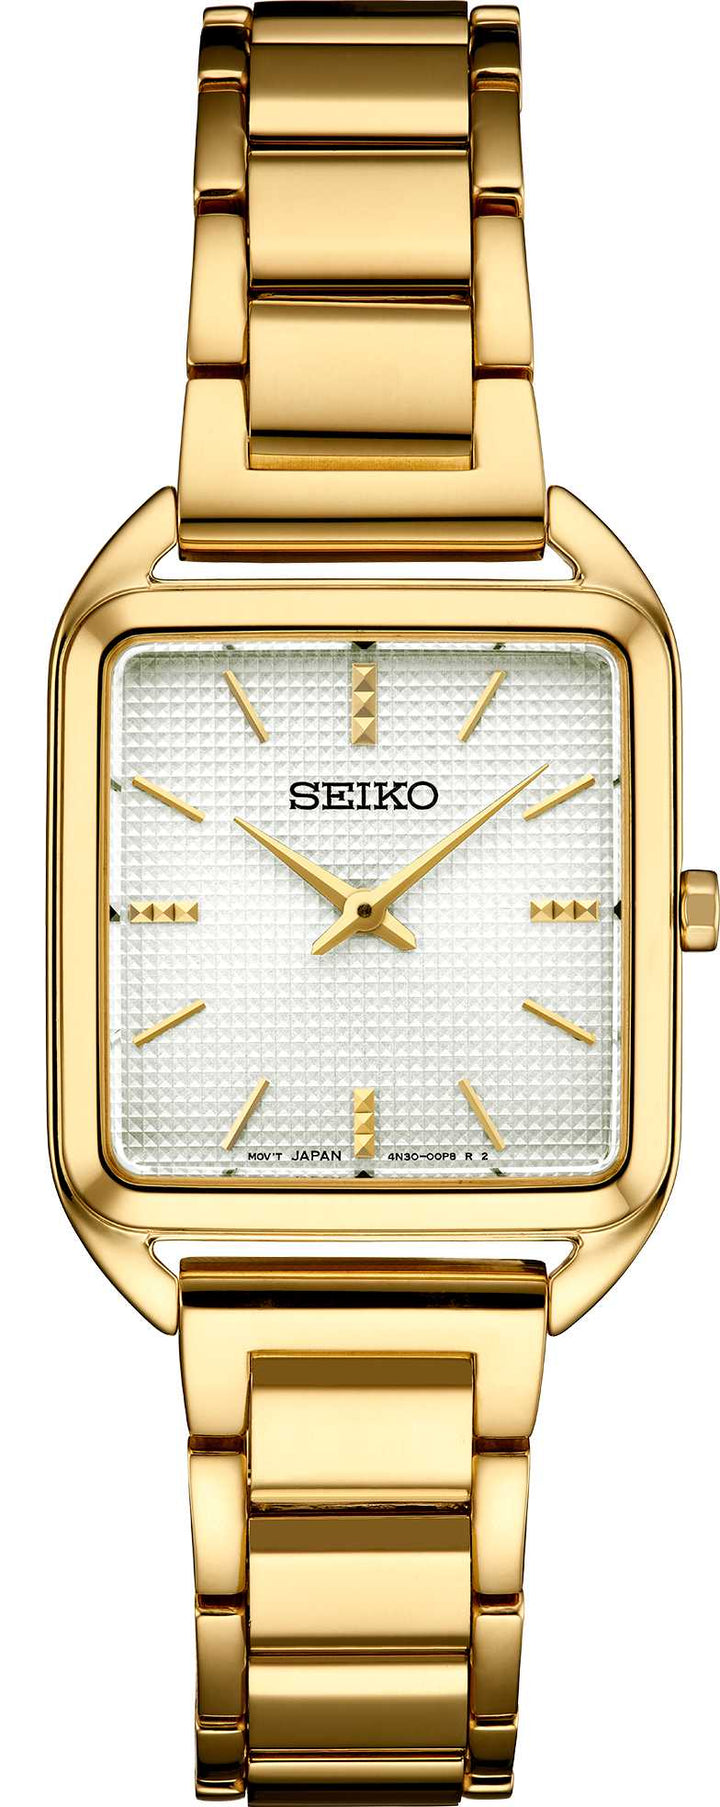 Seiko SWR078 Watch Technicians Store